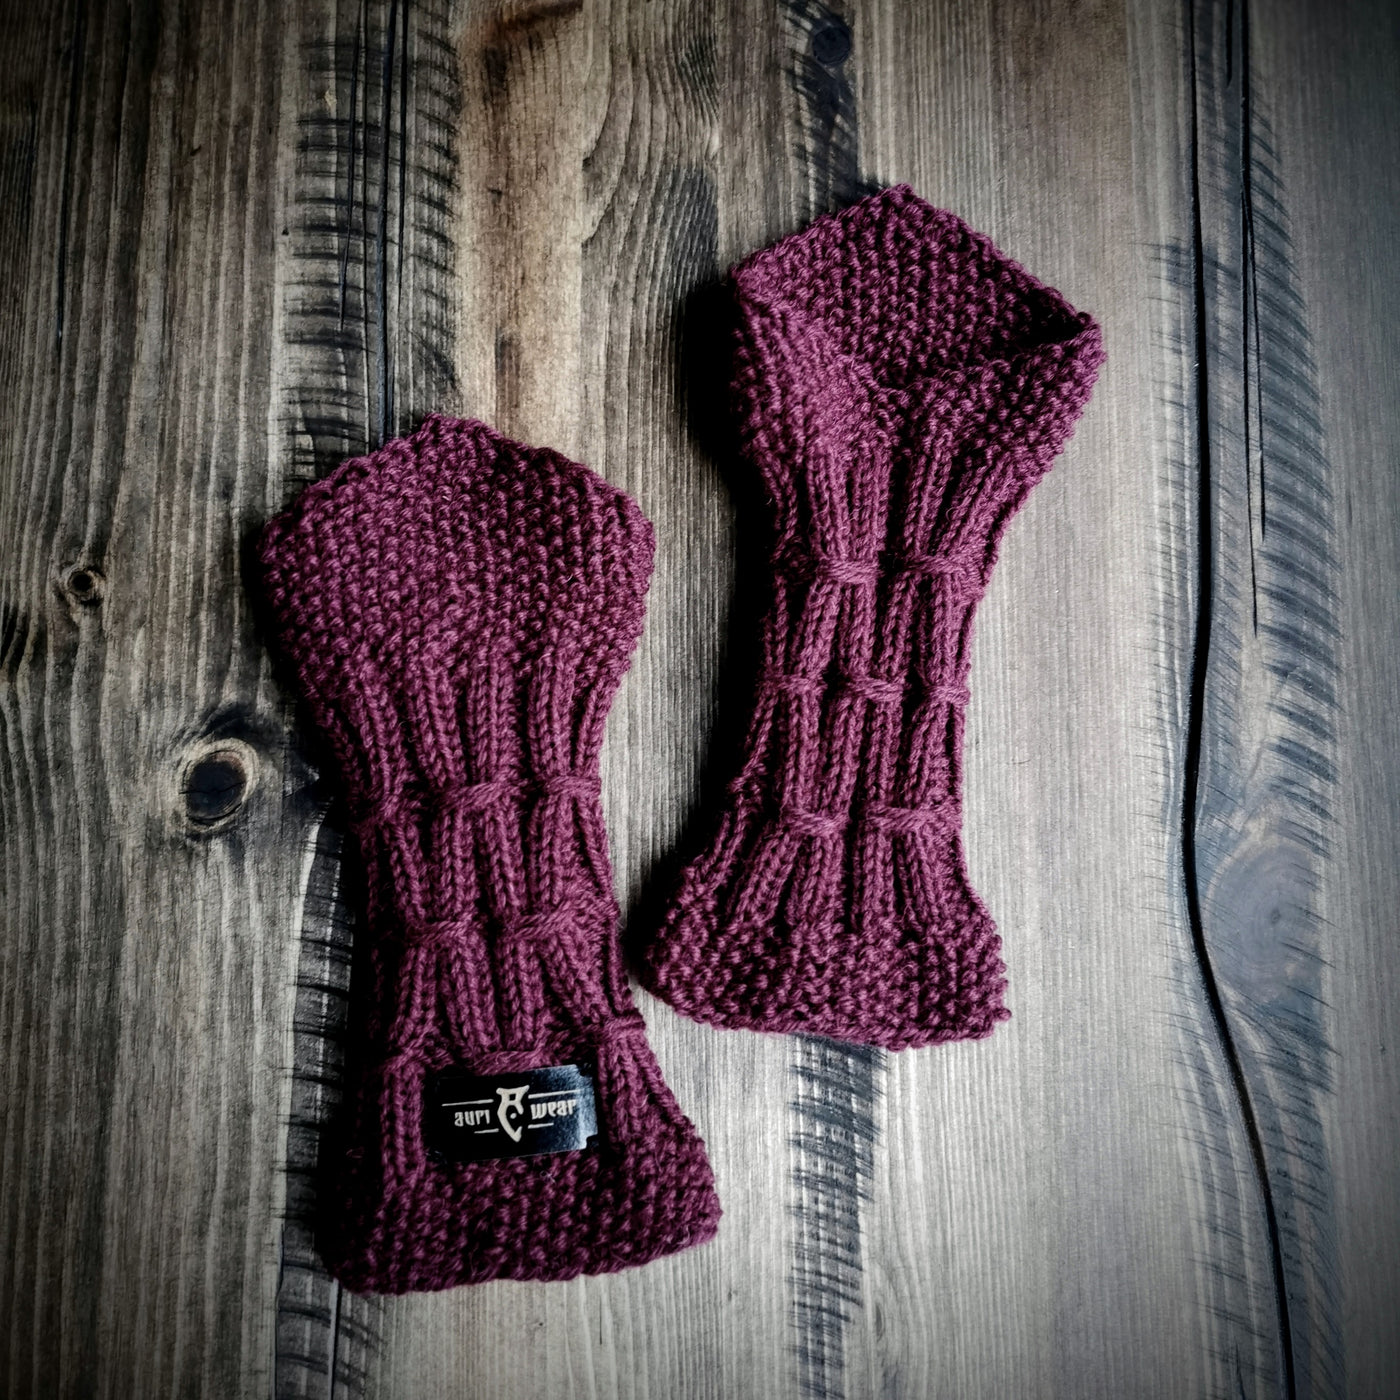 Handmade knitted deep purple wrist warmers